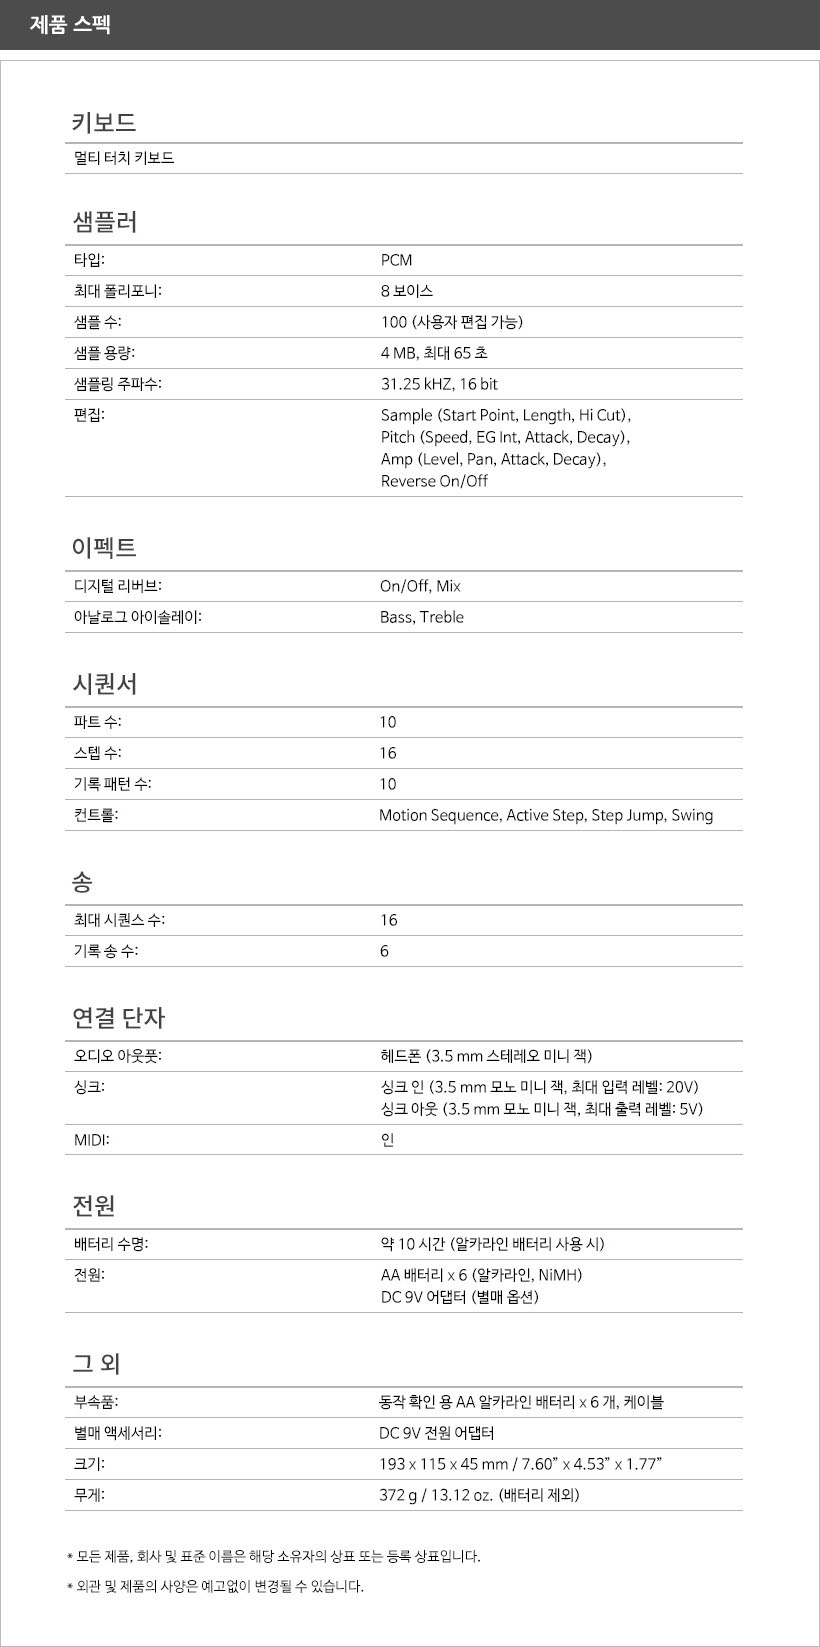 volca sample OK GO edition 제품 스펙